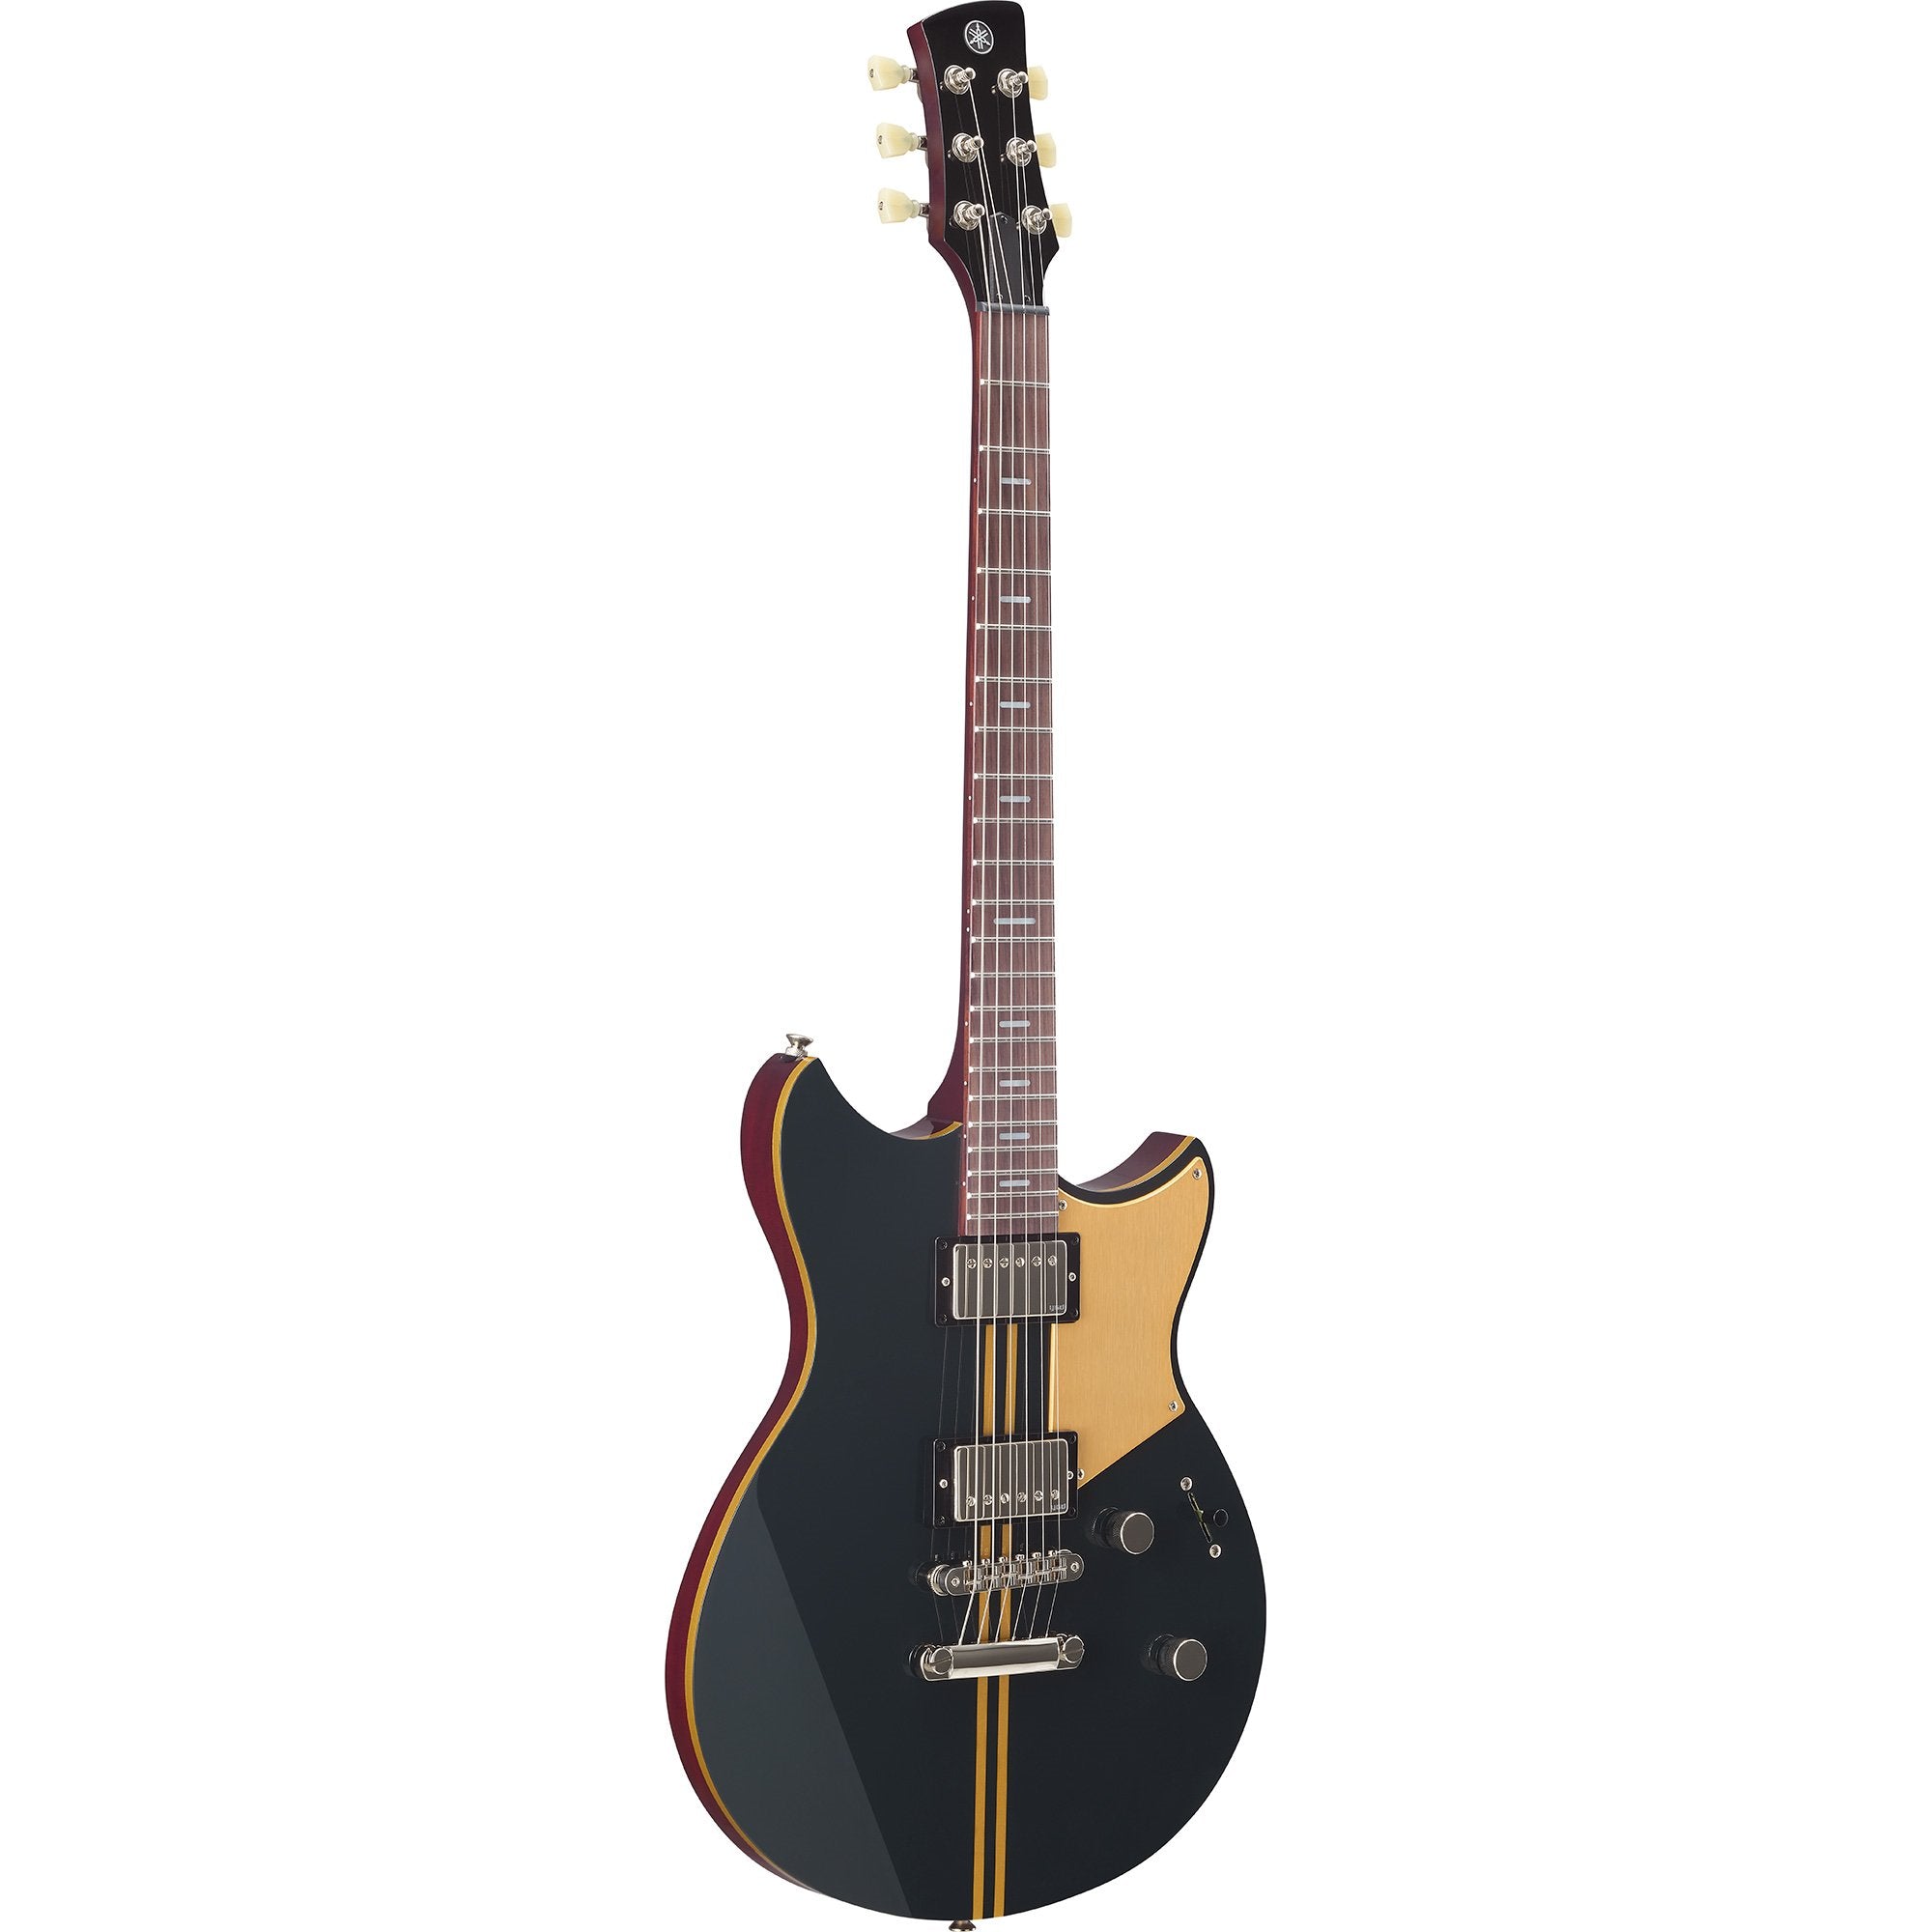 Yamaha Revstar RSP20X RBC Electric Guitar - Rusty Brass Charcoal